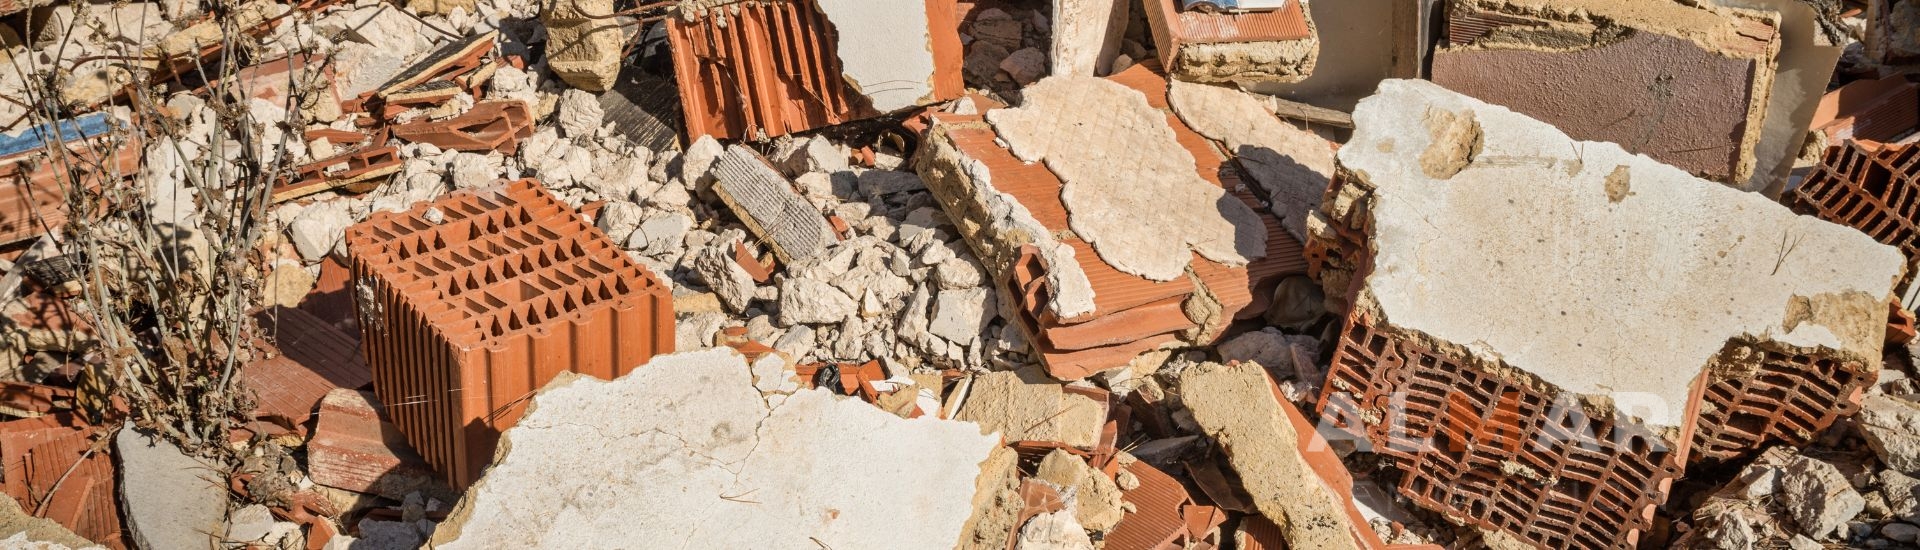 complete demolition services in toronto